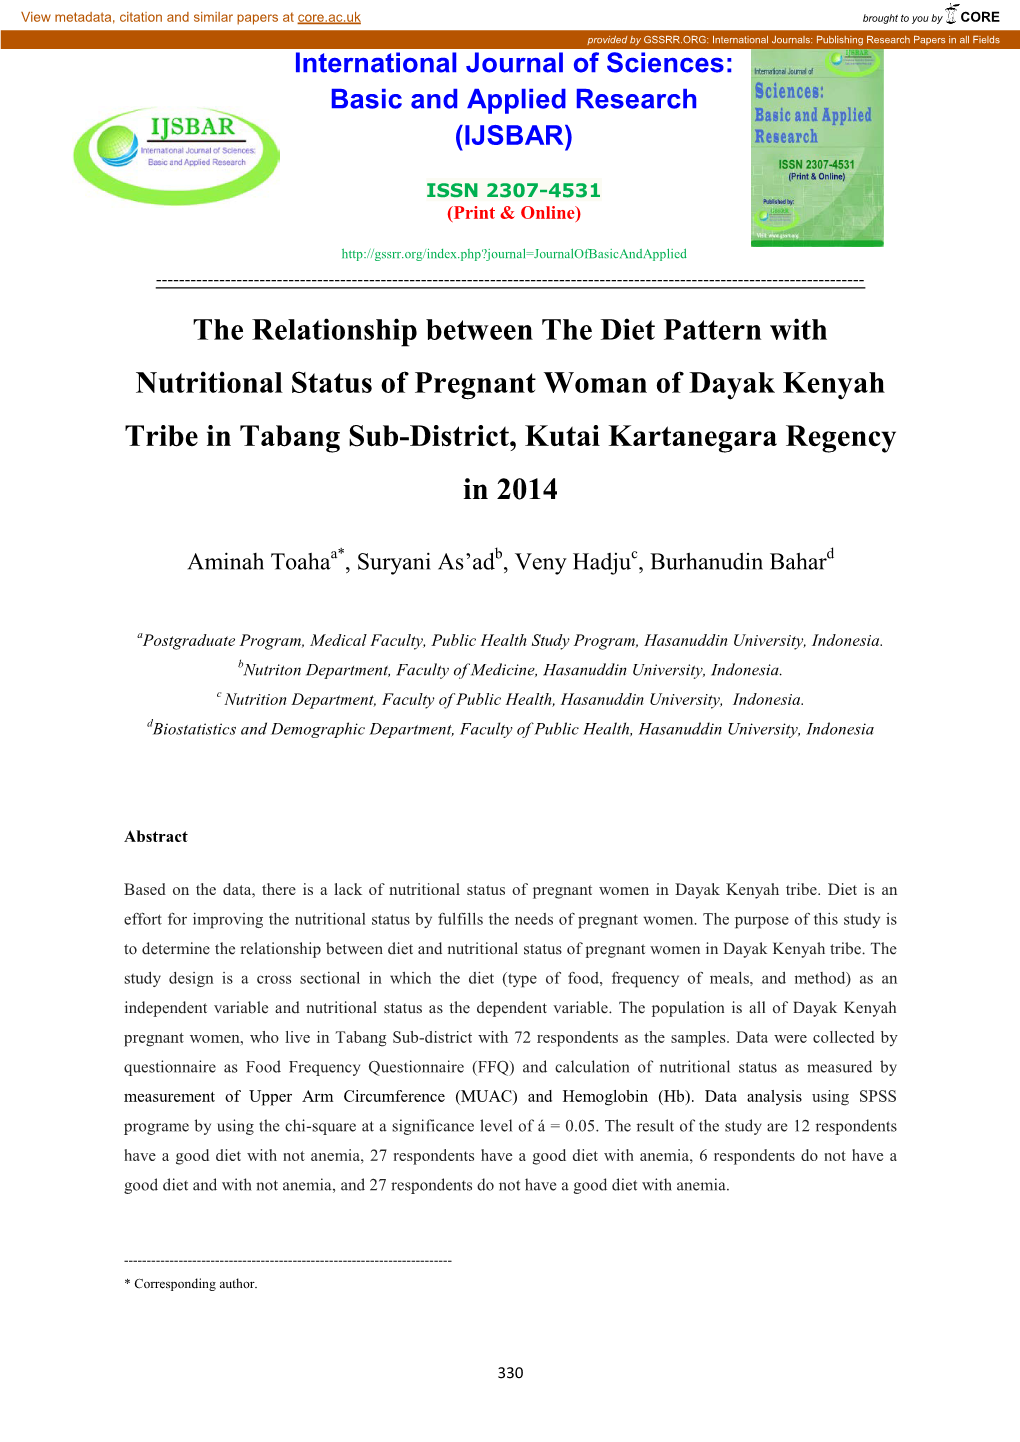 The Relationship Between the Diet Pattern with Nutritional Status of Pregnant Woman of Dayak Kenyah Tribe in Tabang Sub-District, Kutai Kartanegara Regency in 2014